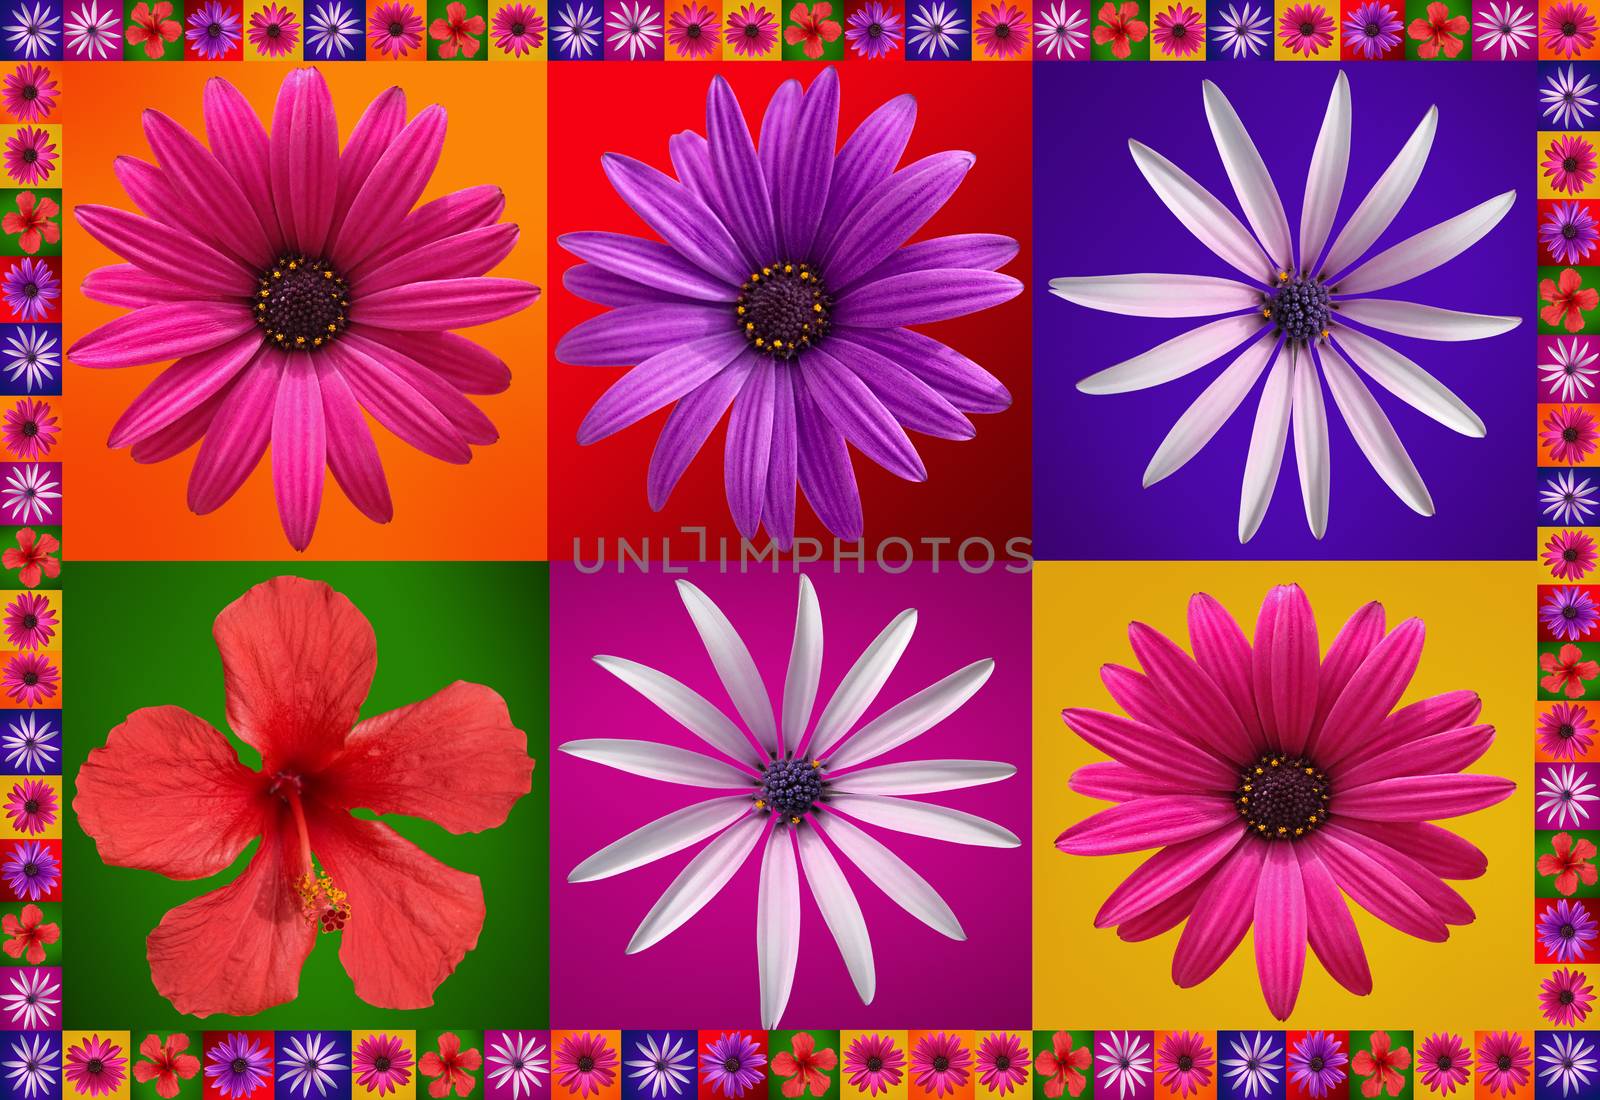 beautiful floral frame  by fotoecho